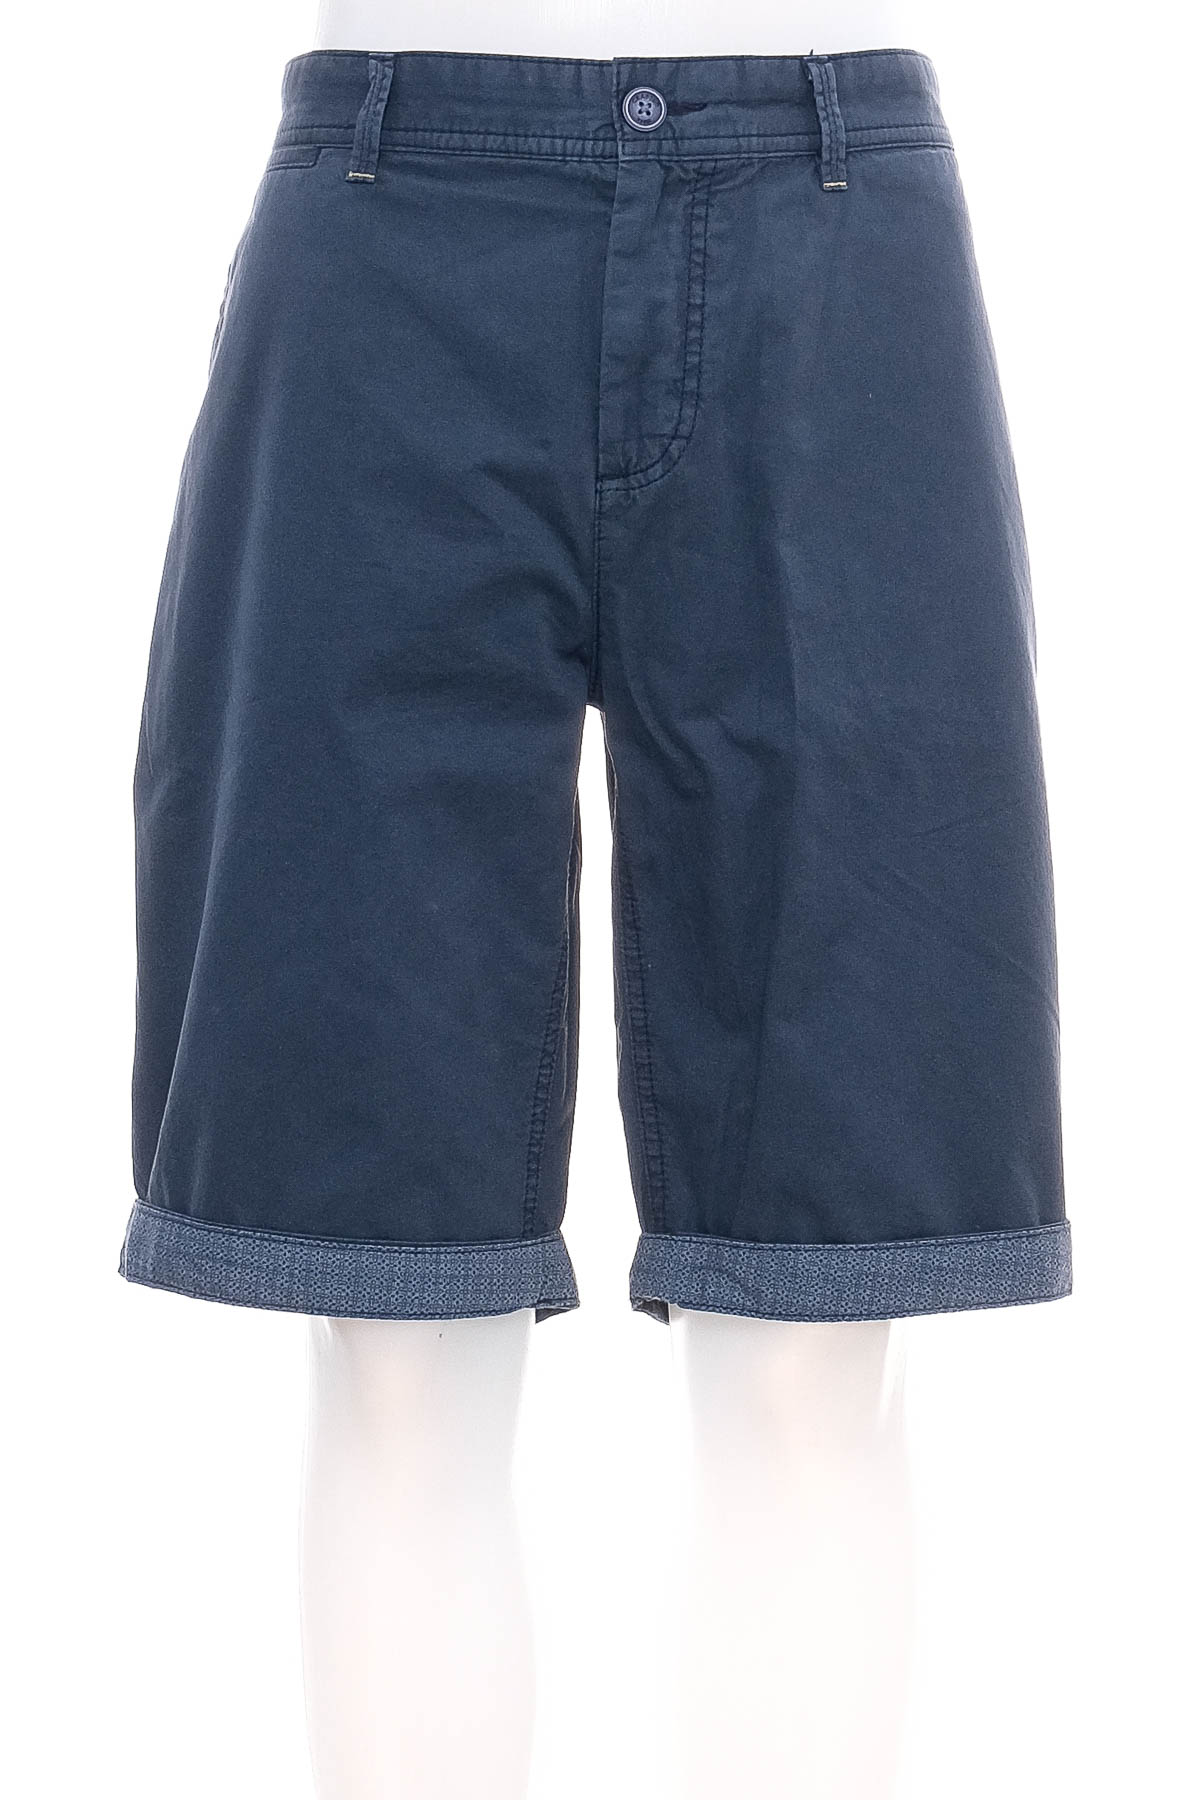 Pantaloni scurți bărbați - Rover & Lakes - 0